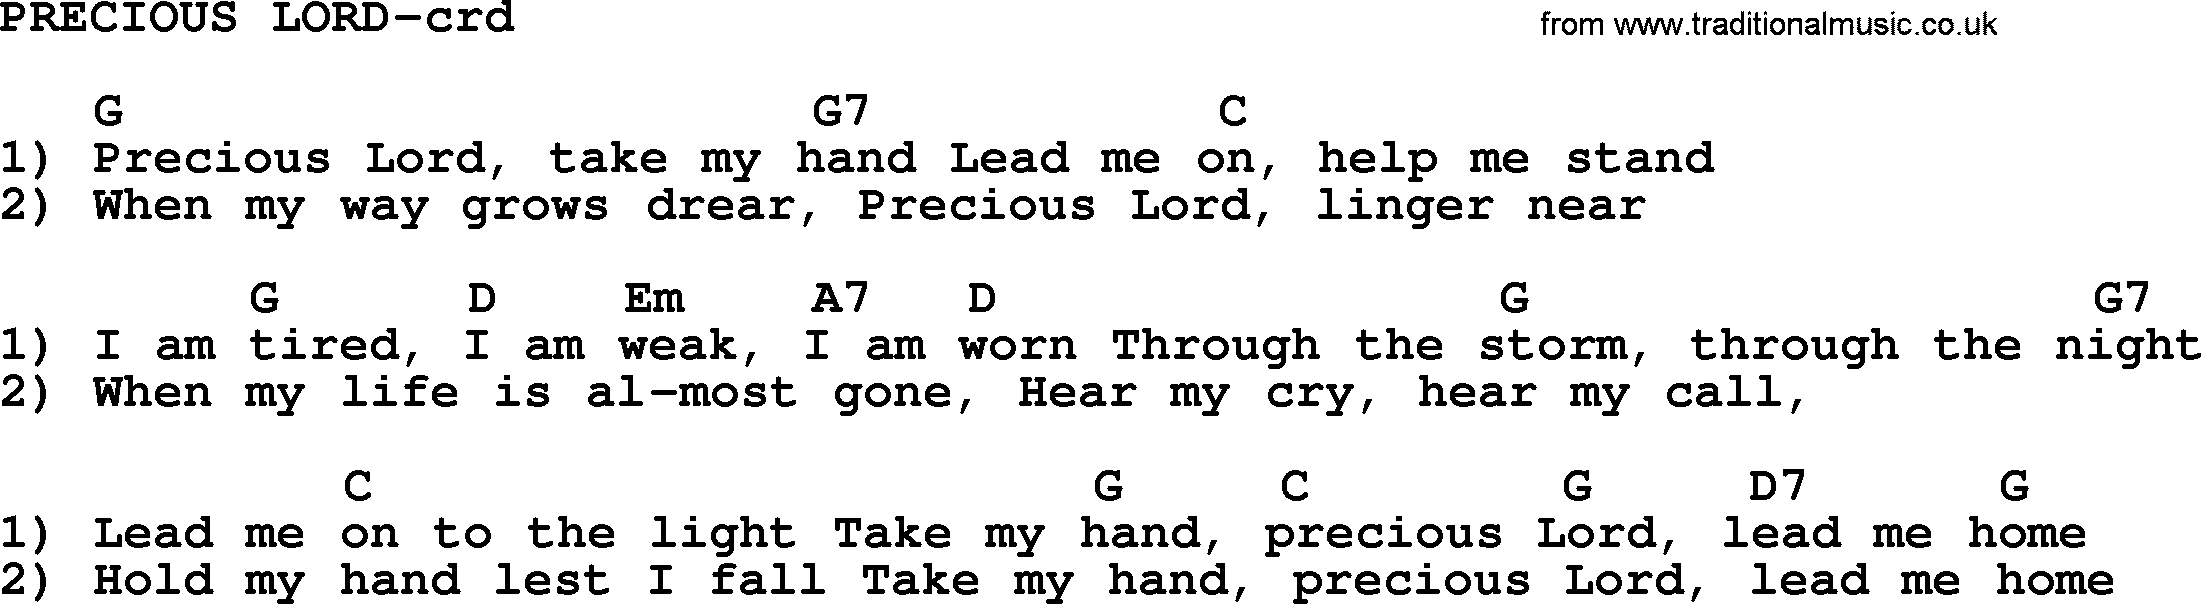 Top 500 Hymn: Precious Lord, lyrics and chords